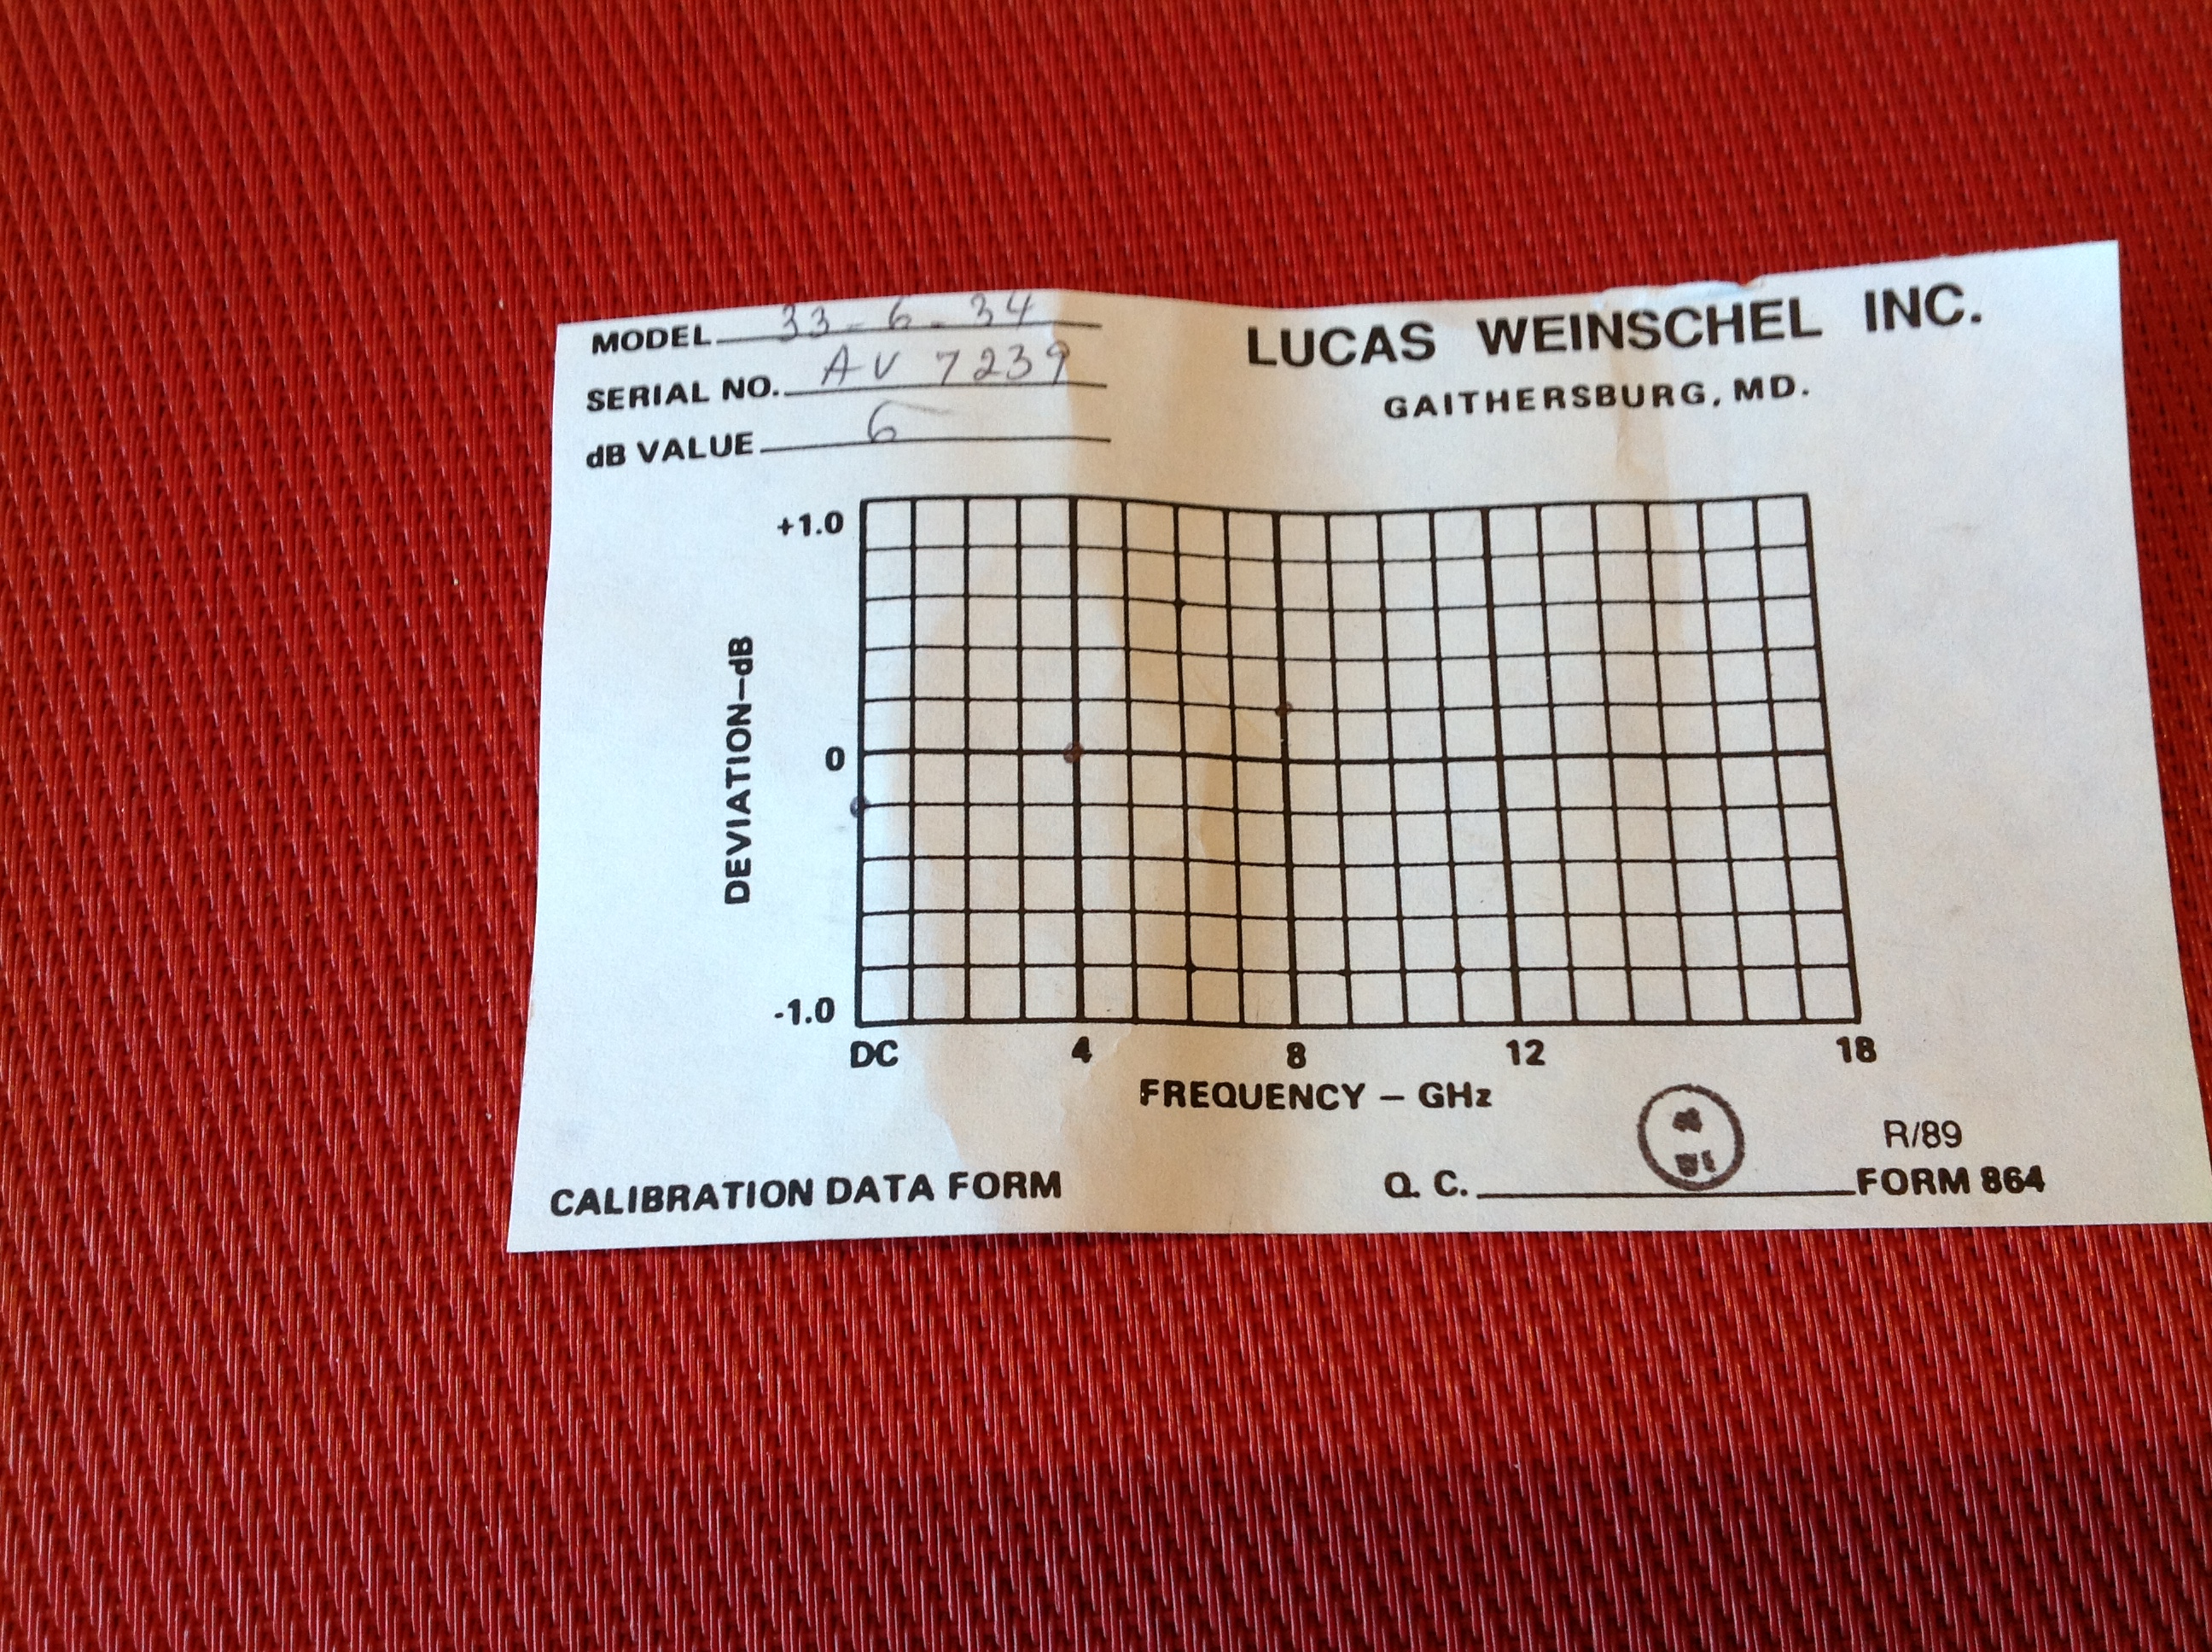 Lucas Weinschel Dämpfungsteil Mod. 33-6-34, 25 W, ....8 GHz